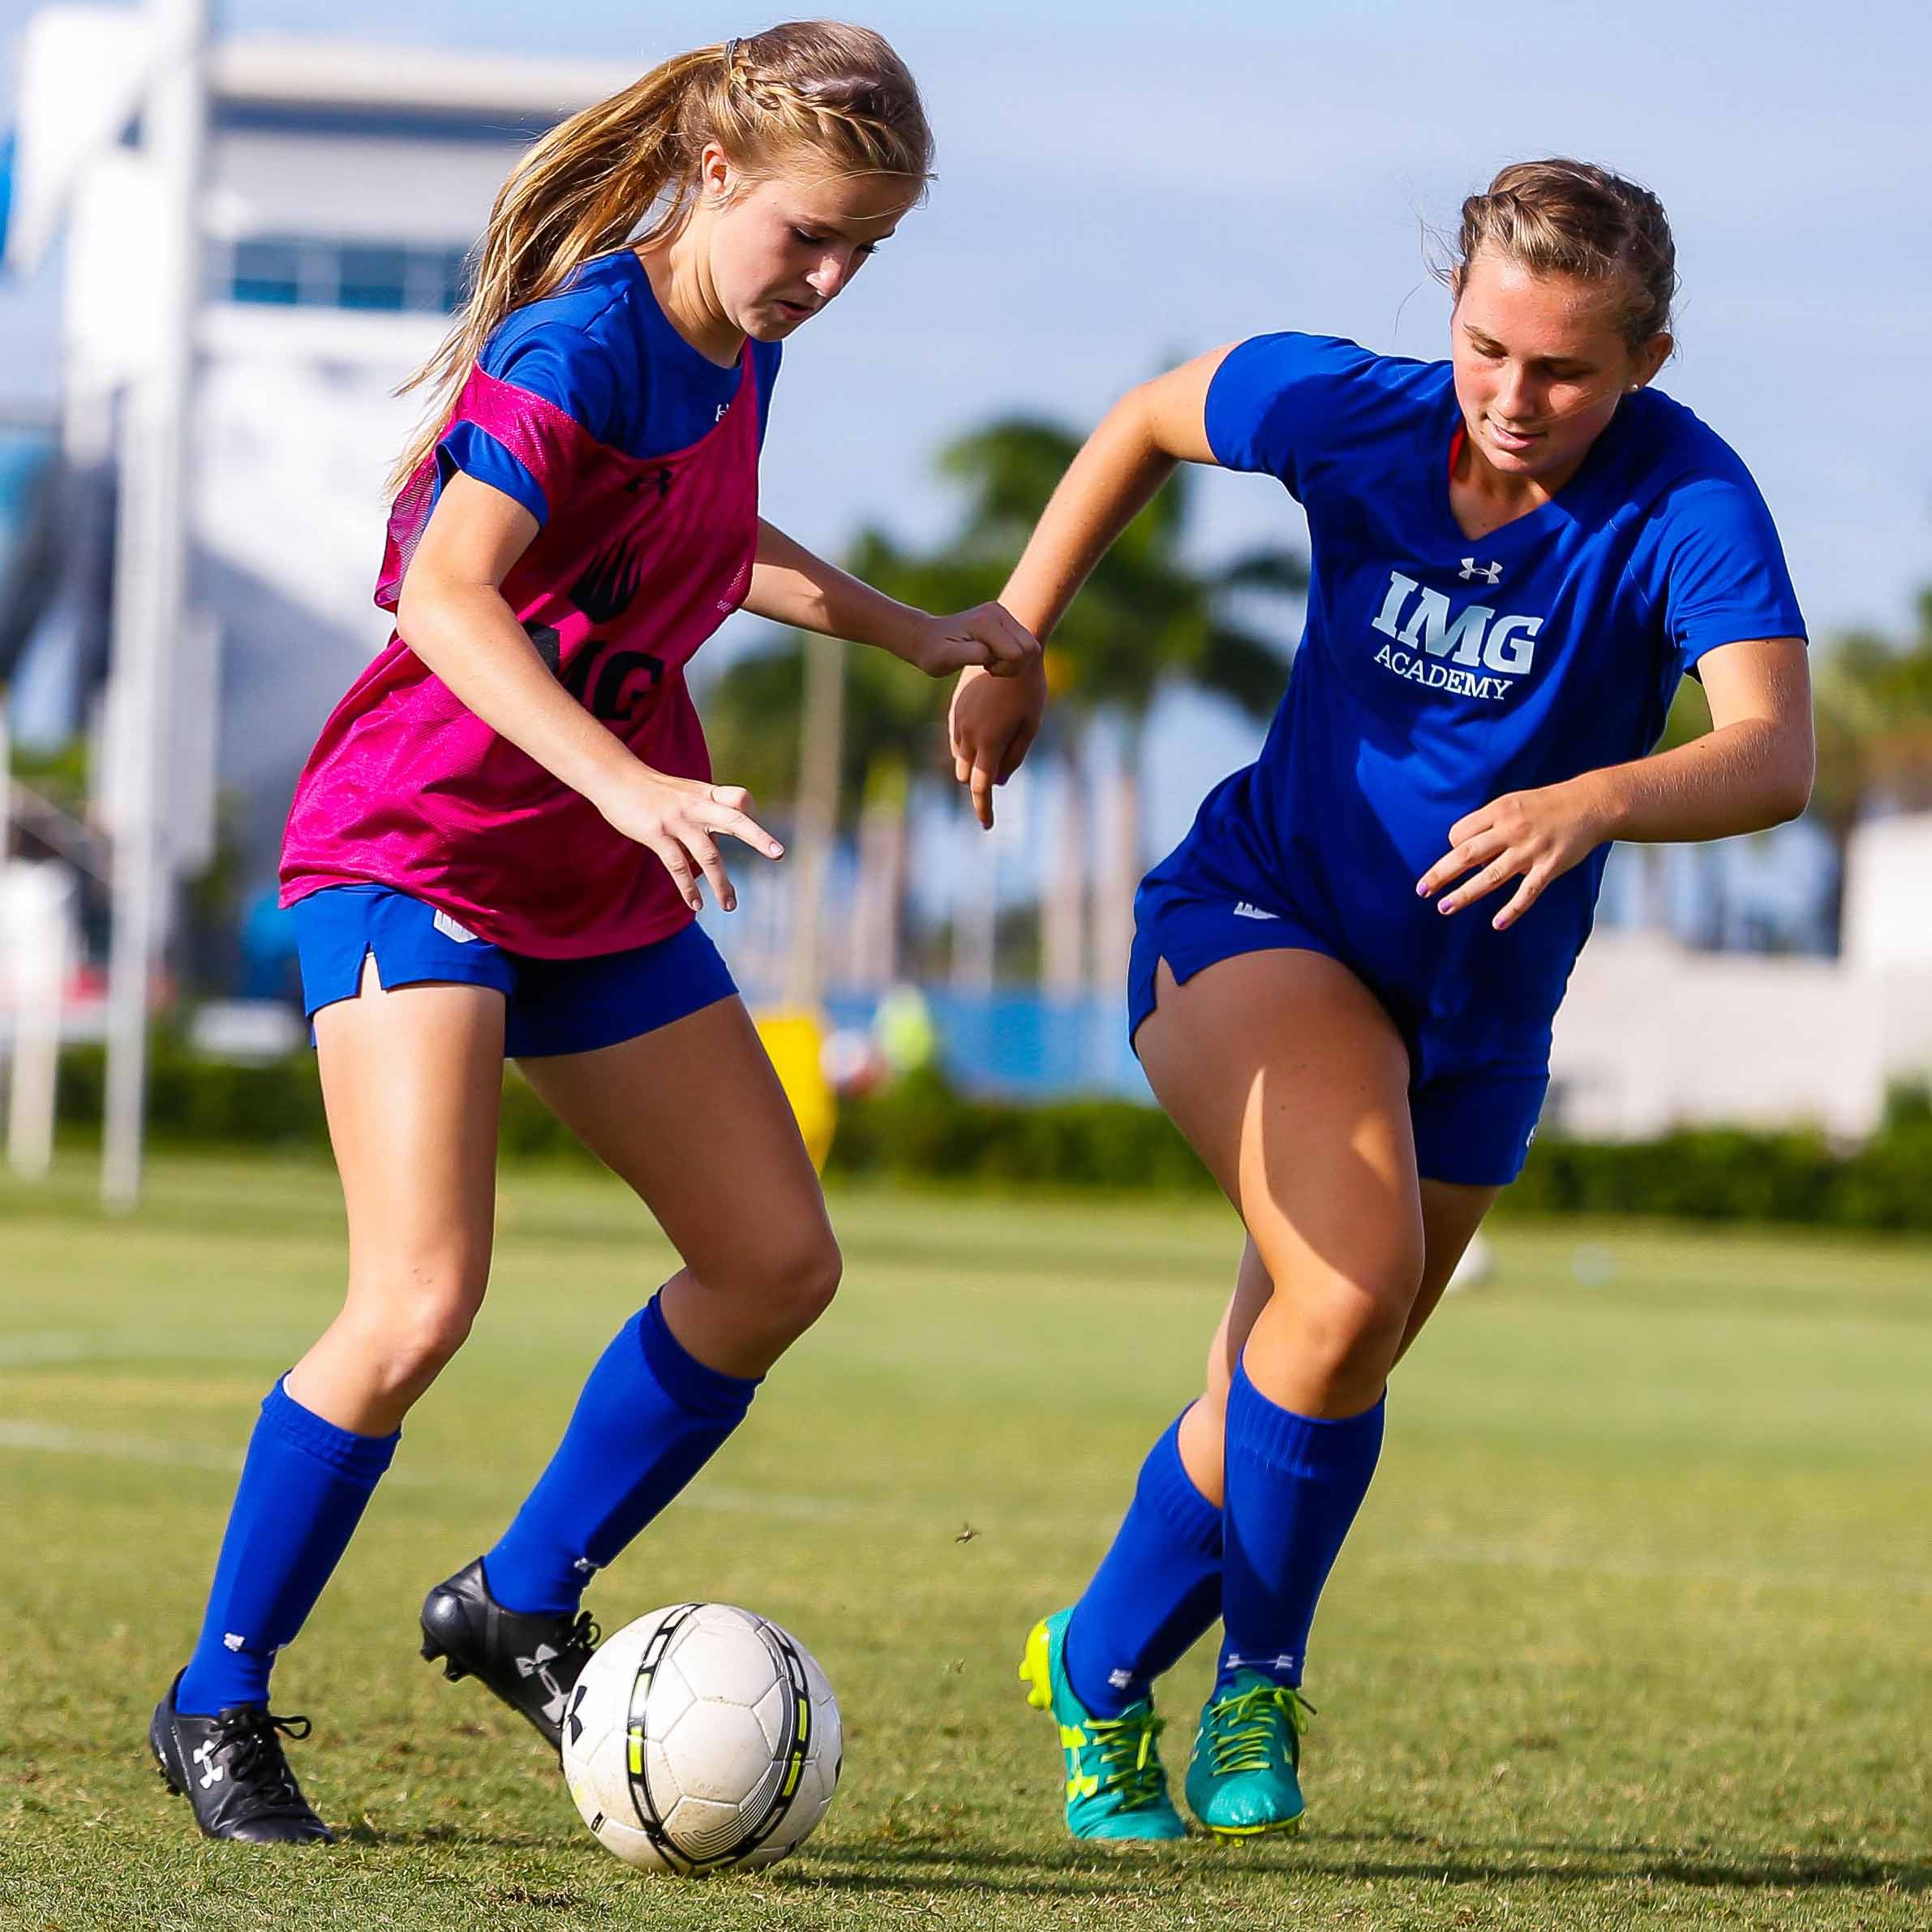 Girls Soccer Camps Girls Soccer Training Img Academy 2019